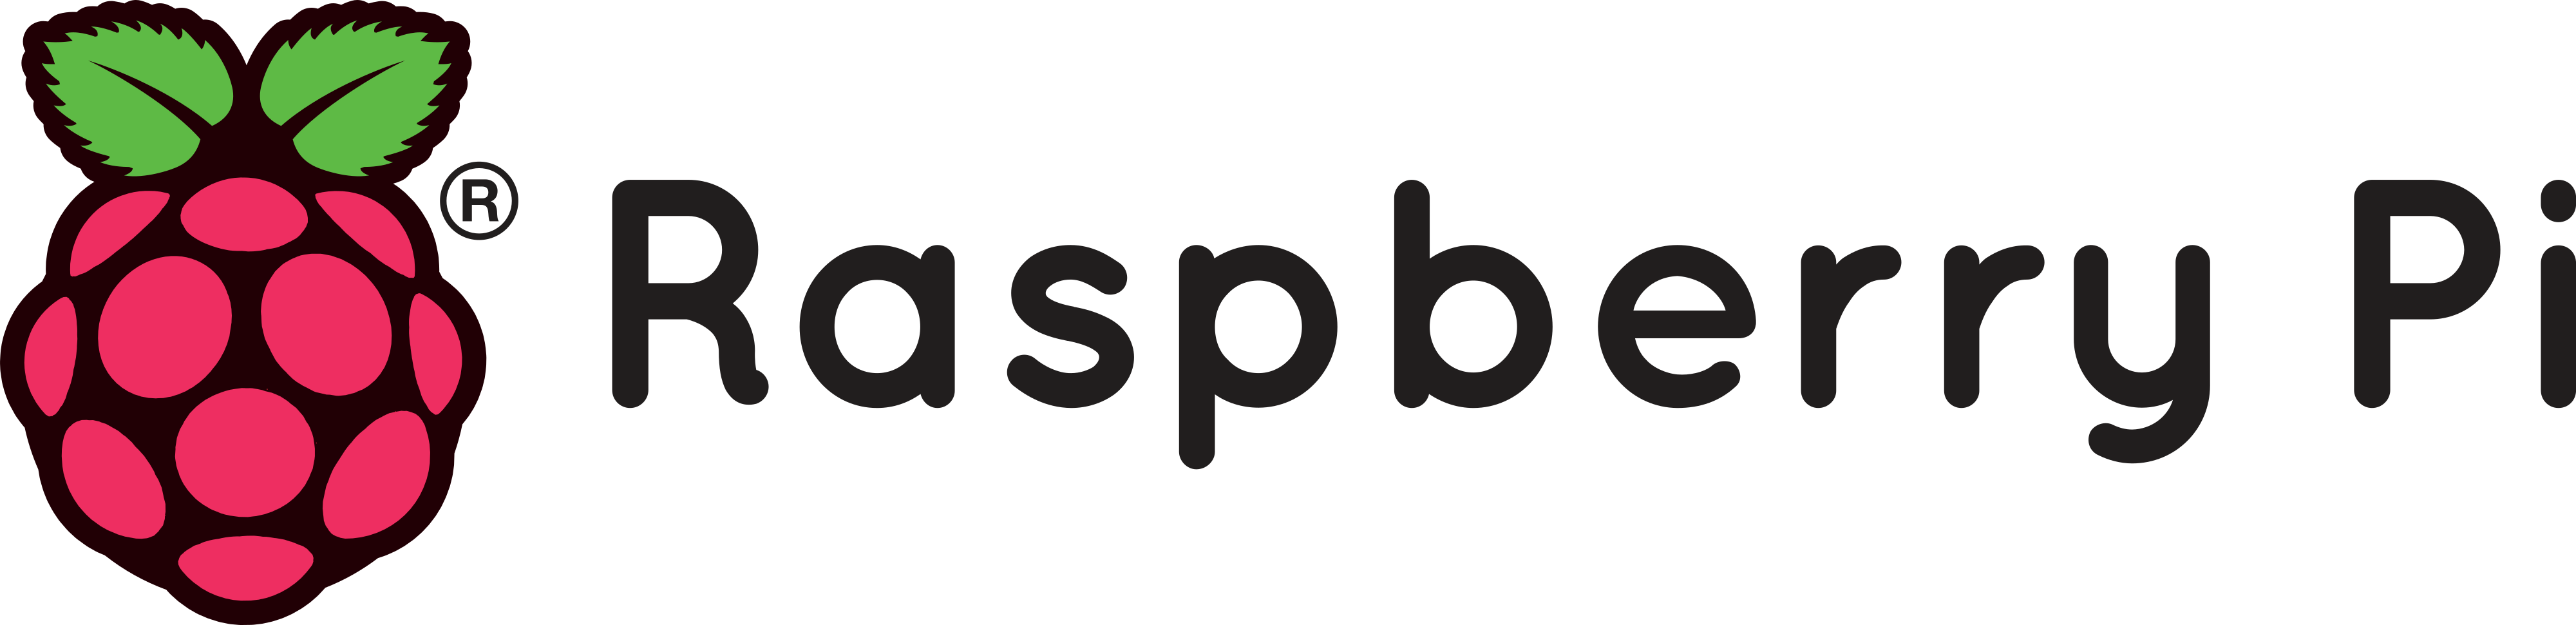 Raspberry Pi Logo Download